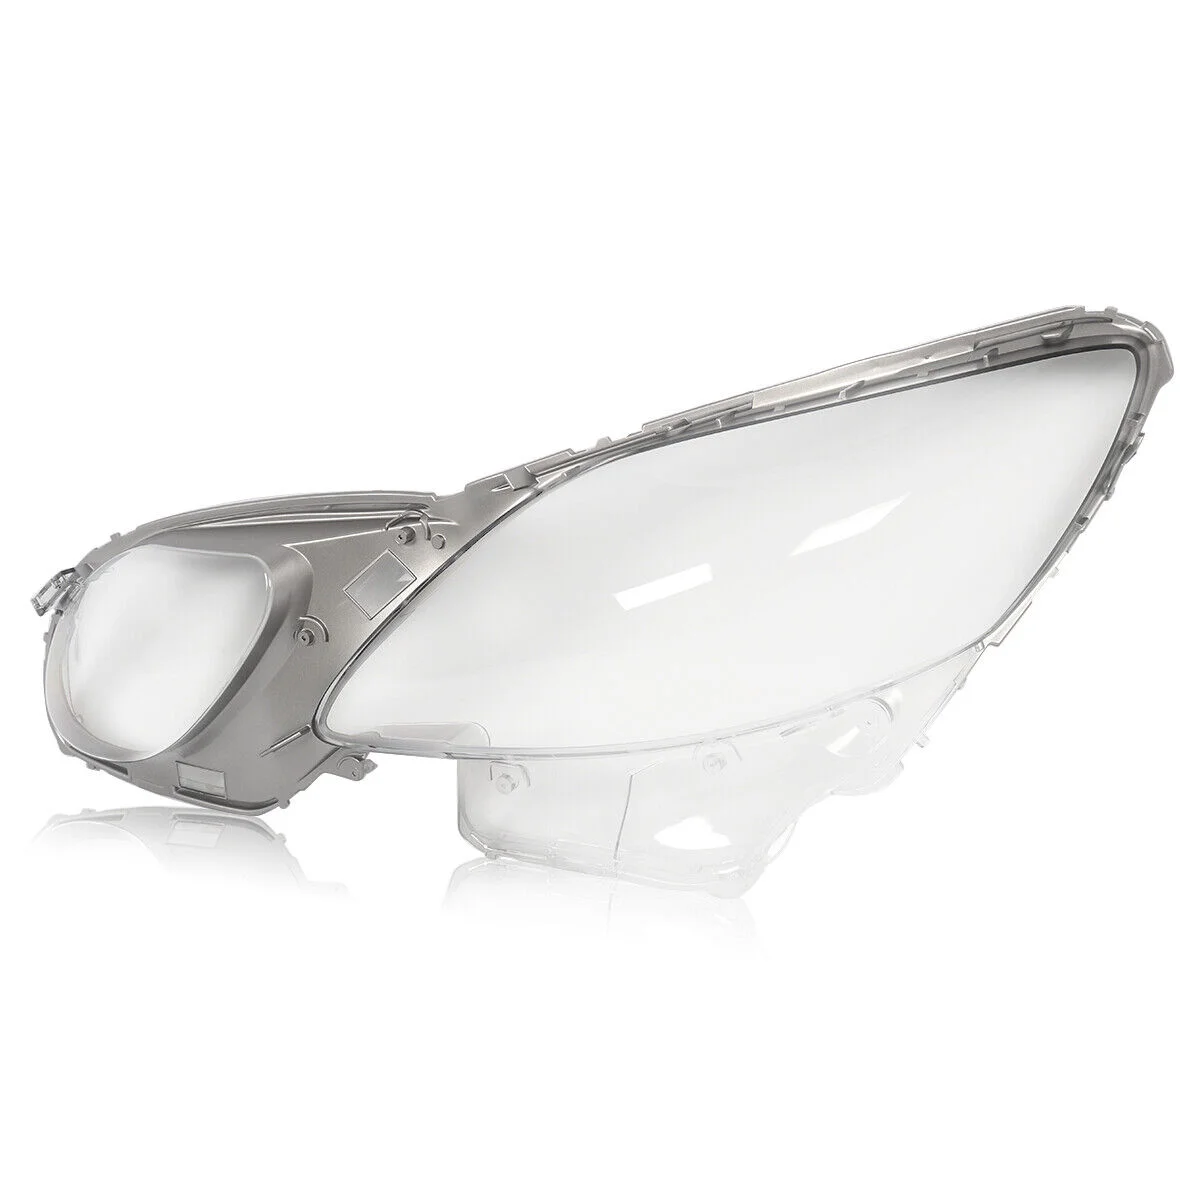 

Left Car Headlight Lens Cover Head Light Lamp Shade Shell Auto Shell Cover for Lexus GS300 GS430 GS450 2006-2011